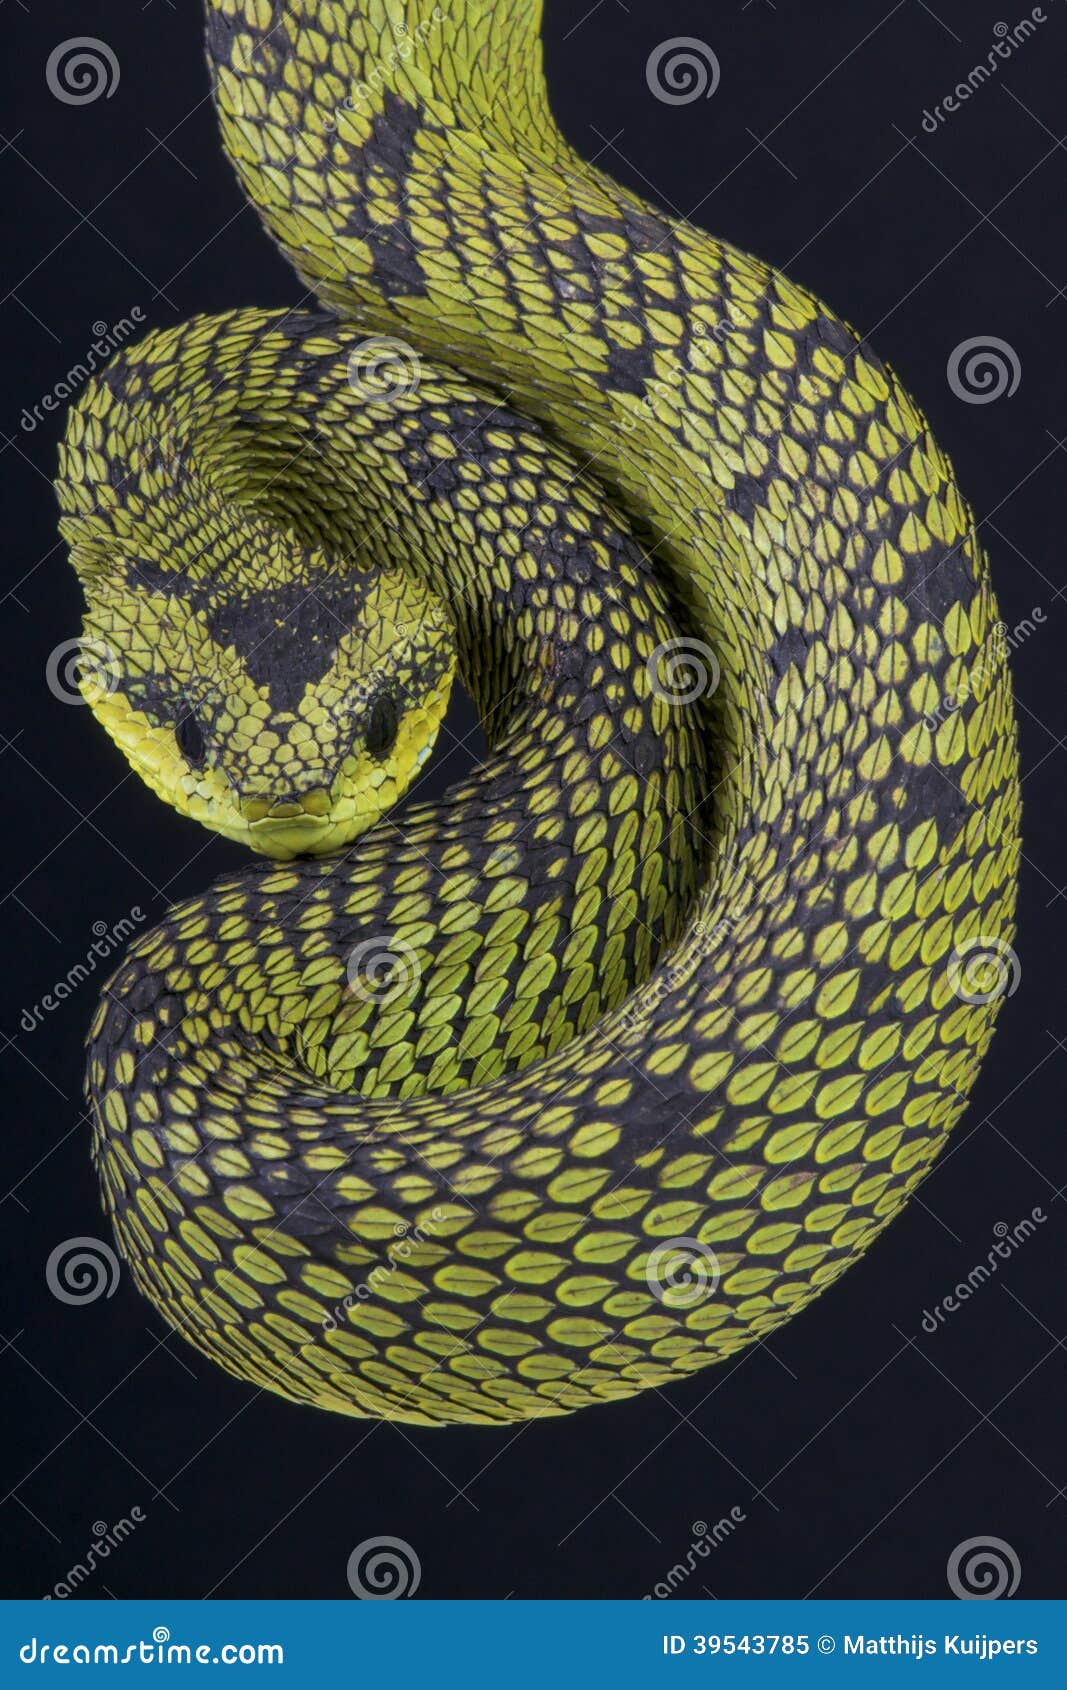 Atheris hispida - Spiny bush viper  Snake, Beautiful snakes, Pretty snakes